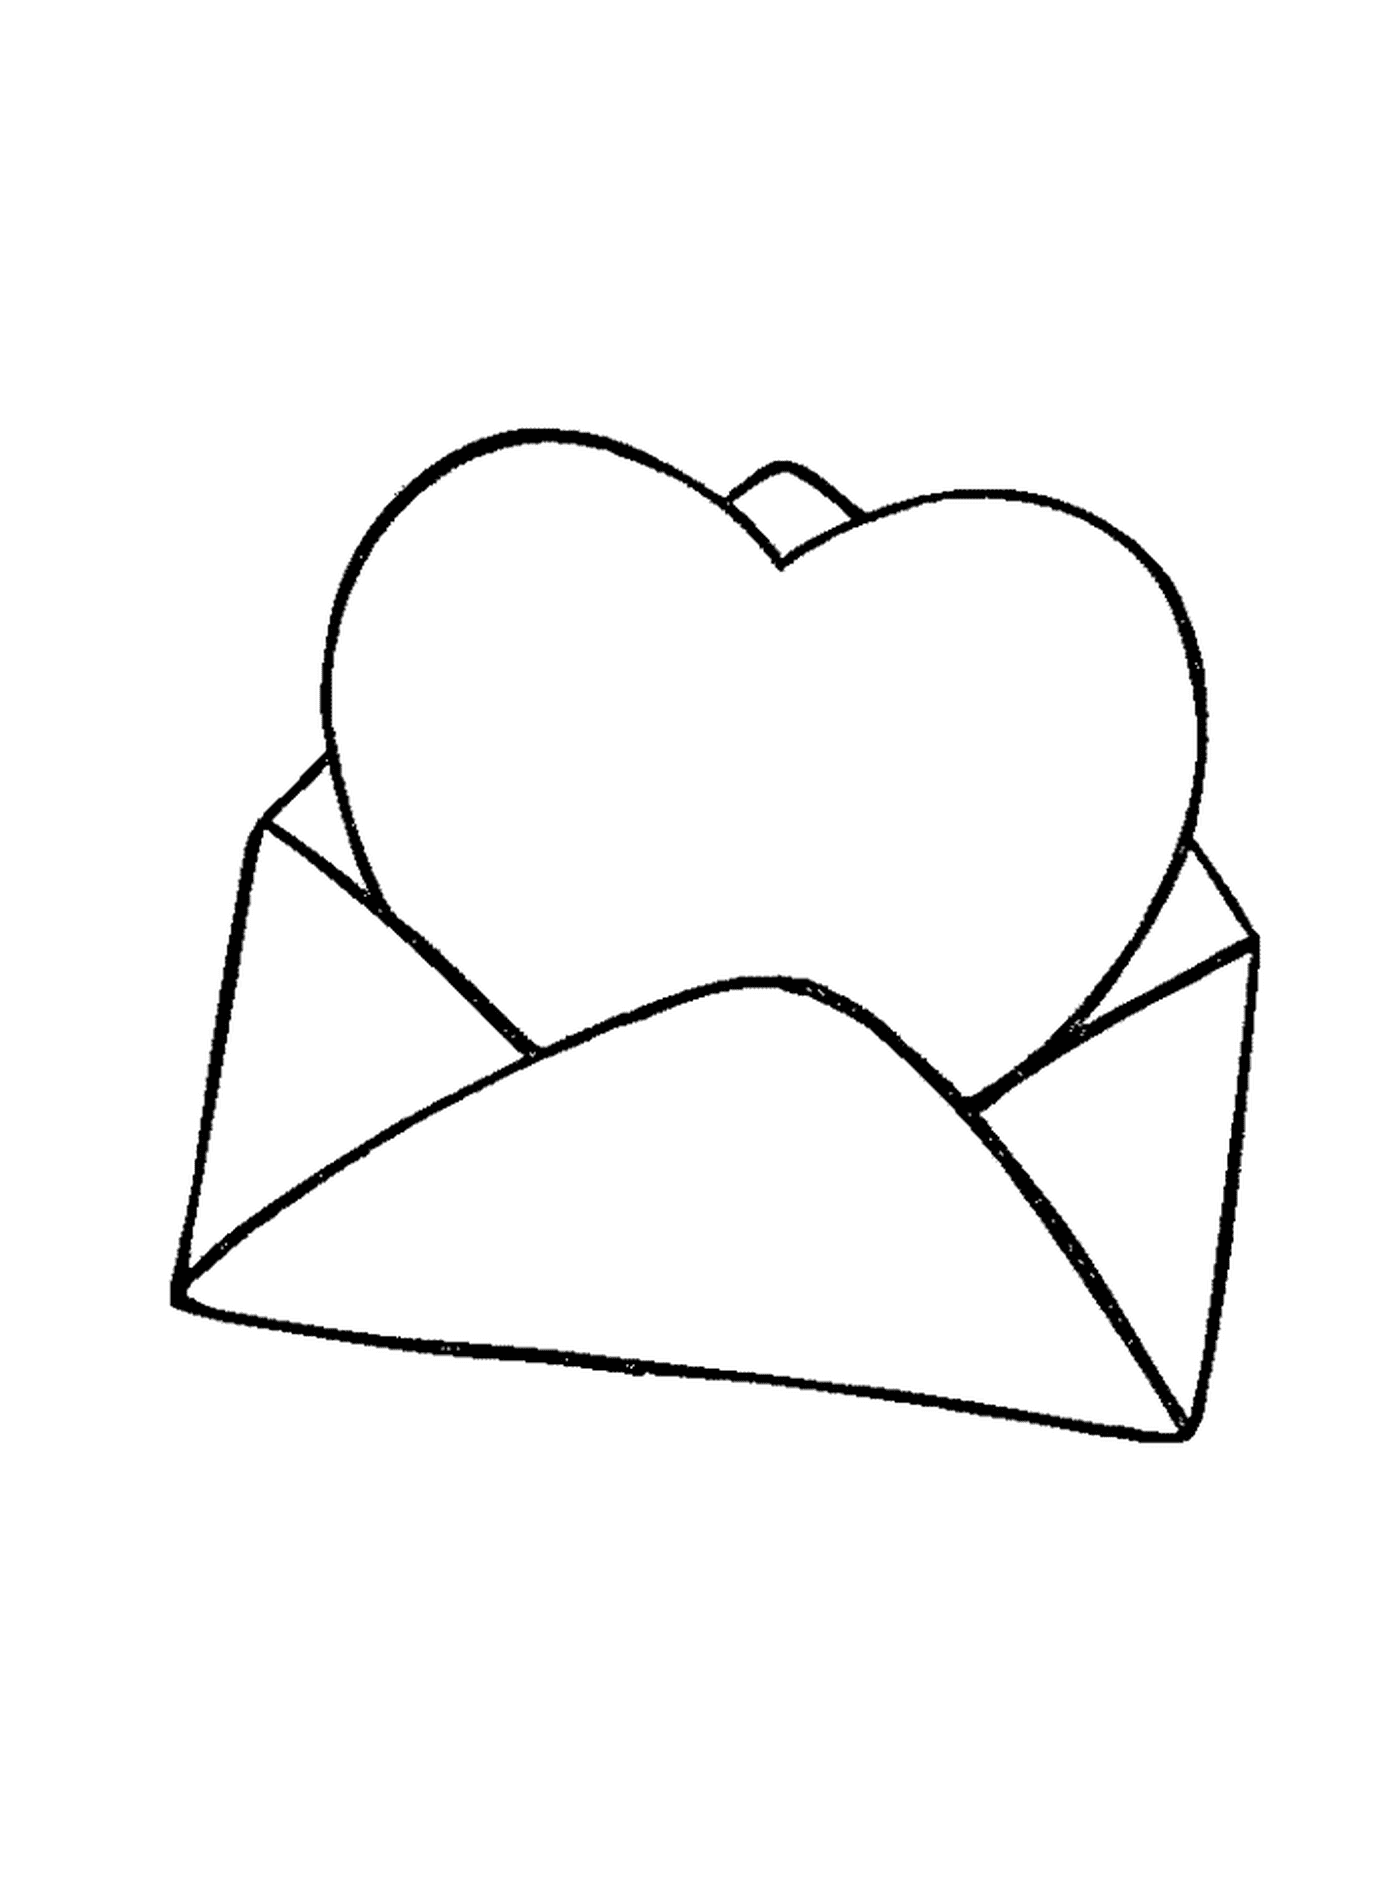  Valentine's Day, love envelope 